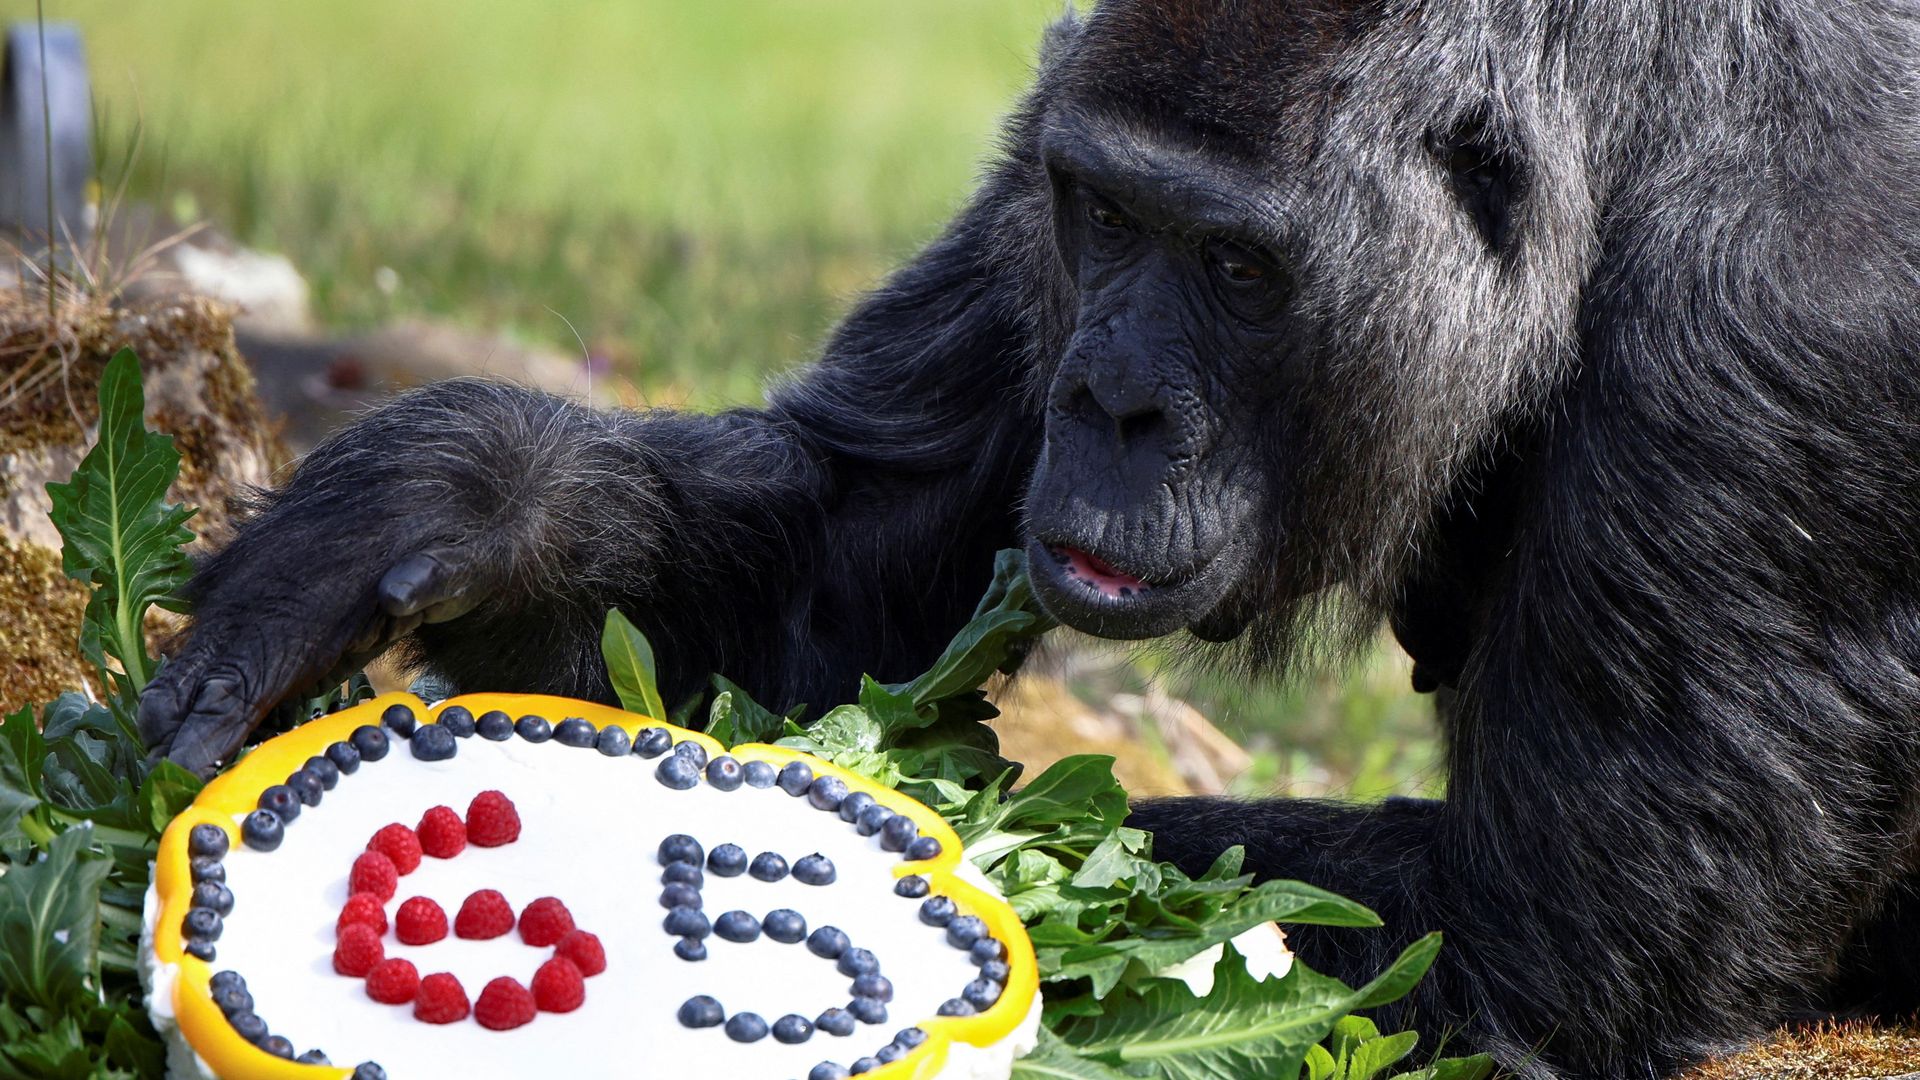 Gorilla with birthday cake